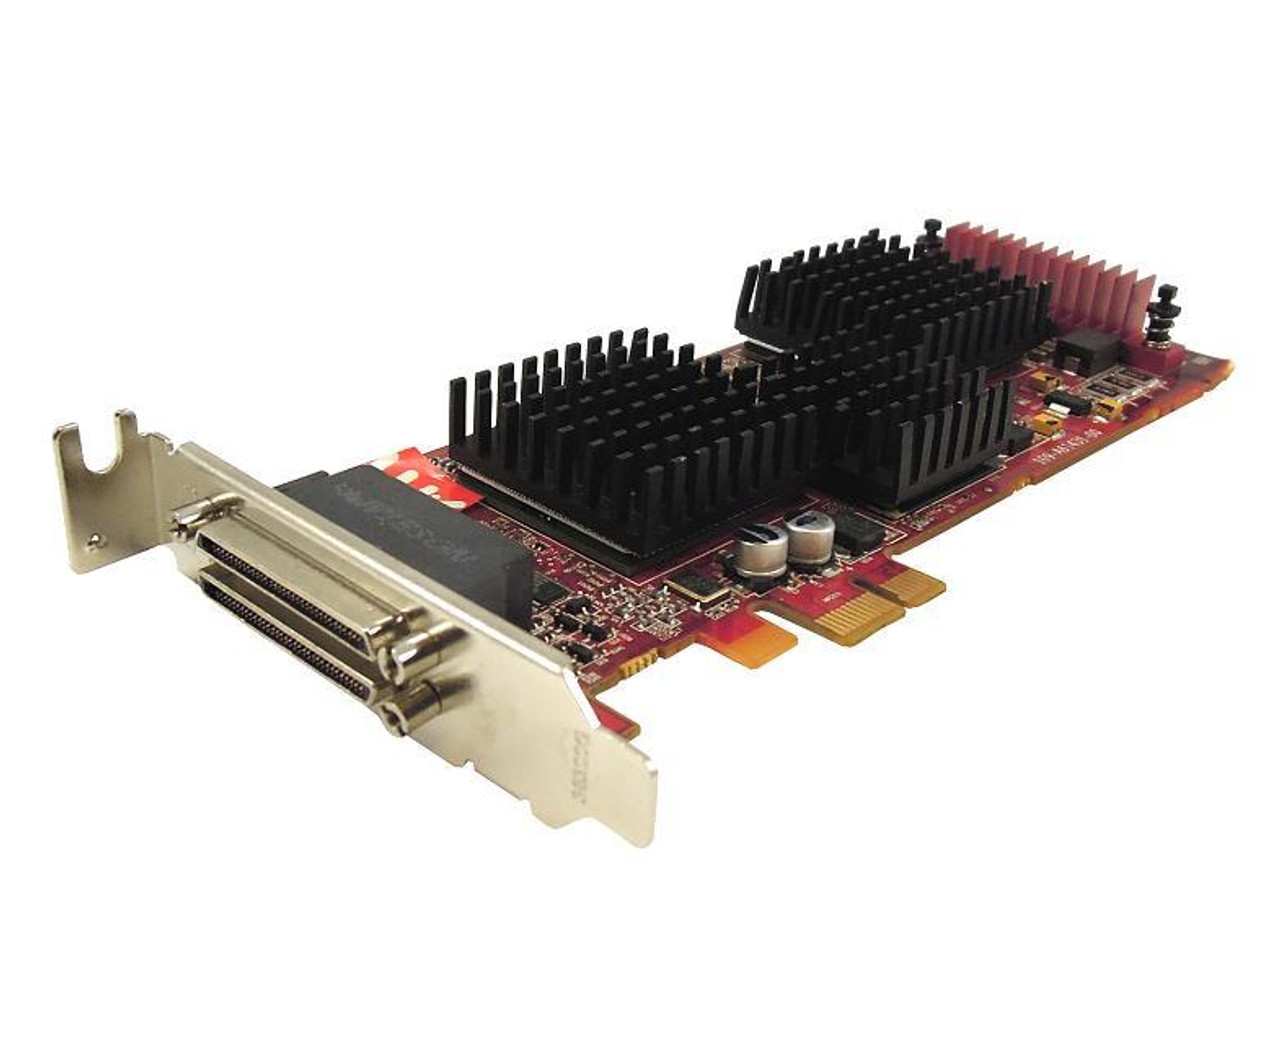 102A6140200 - ATI Tech ATI FireMV 2400 256MB DDR PCI Express x1 4x DVI to VGA/D-Sub/ 2x VHDCI Connector Workstation Video Graphics Card